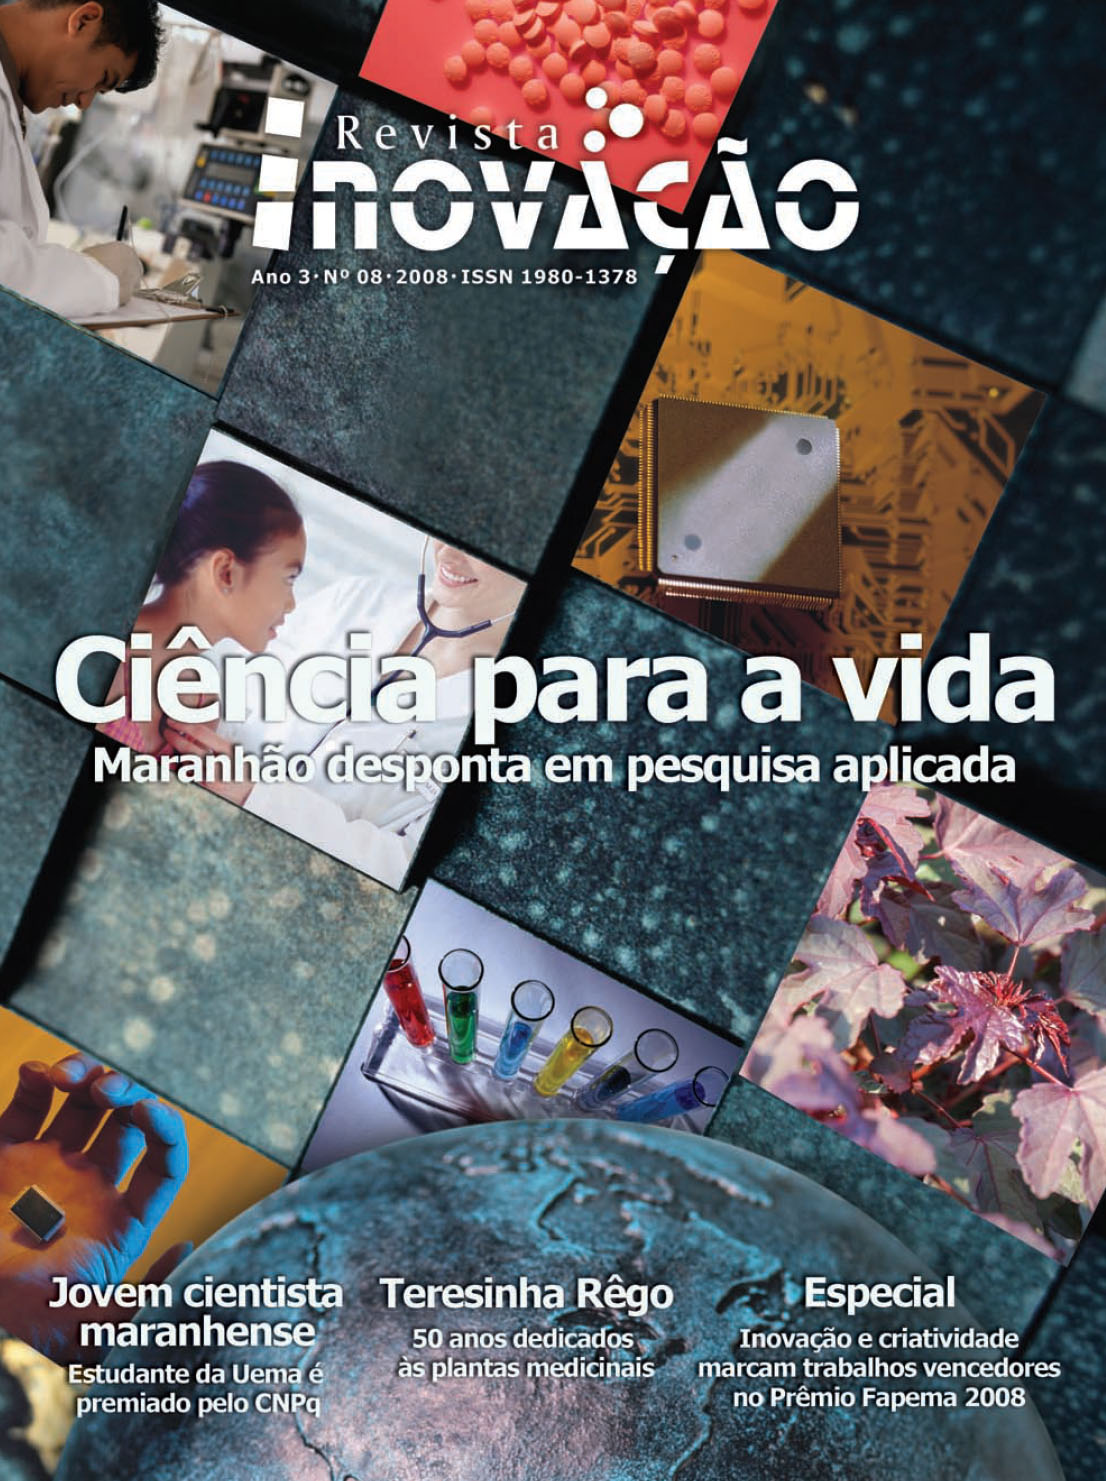 CAPAS revista Inovacao 01 - 26_0007_Camada 15